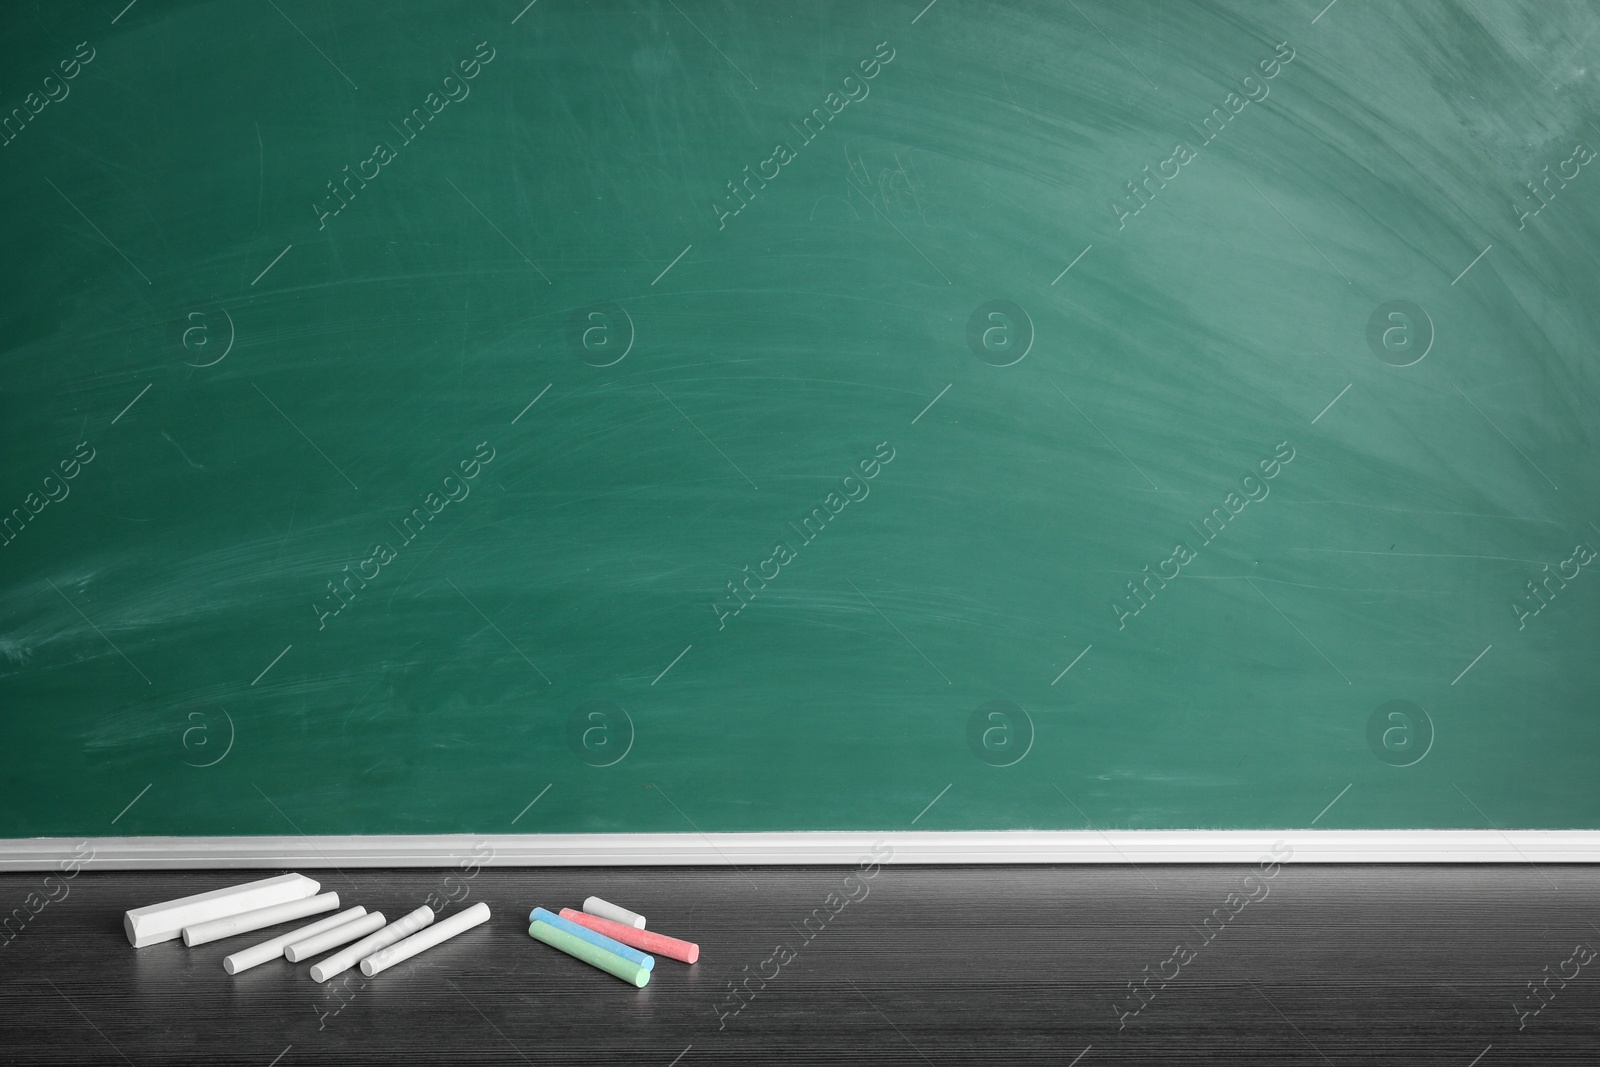 Photo of Chalk sticks on table near board in classroom